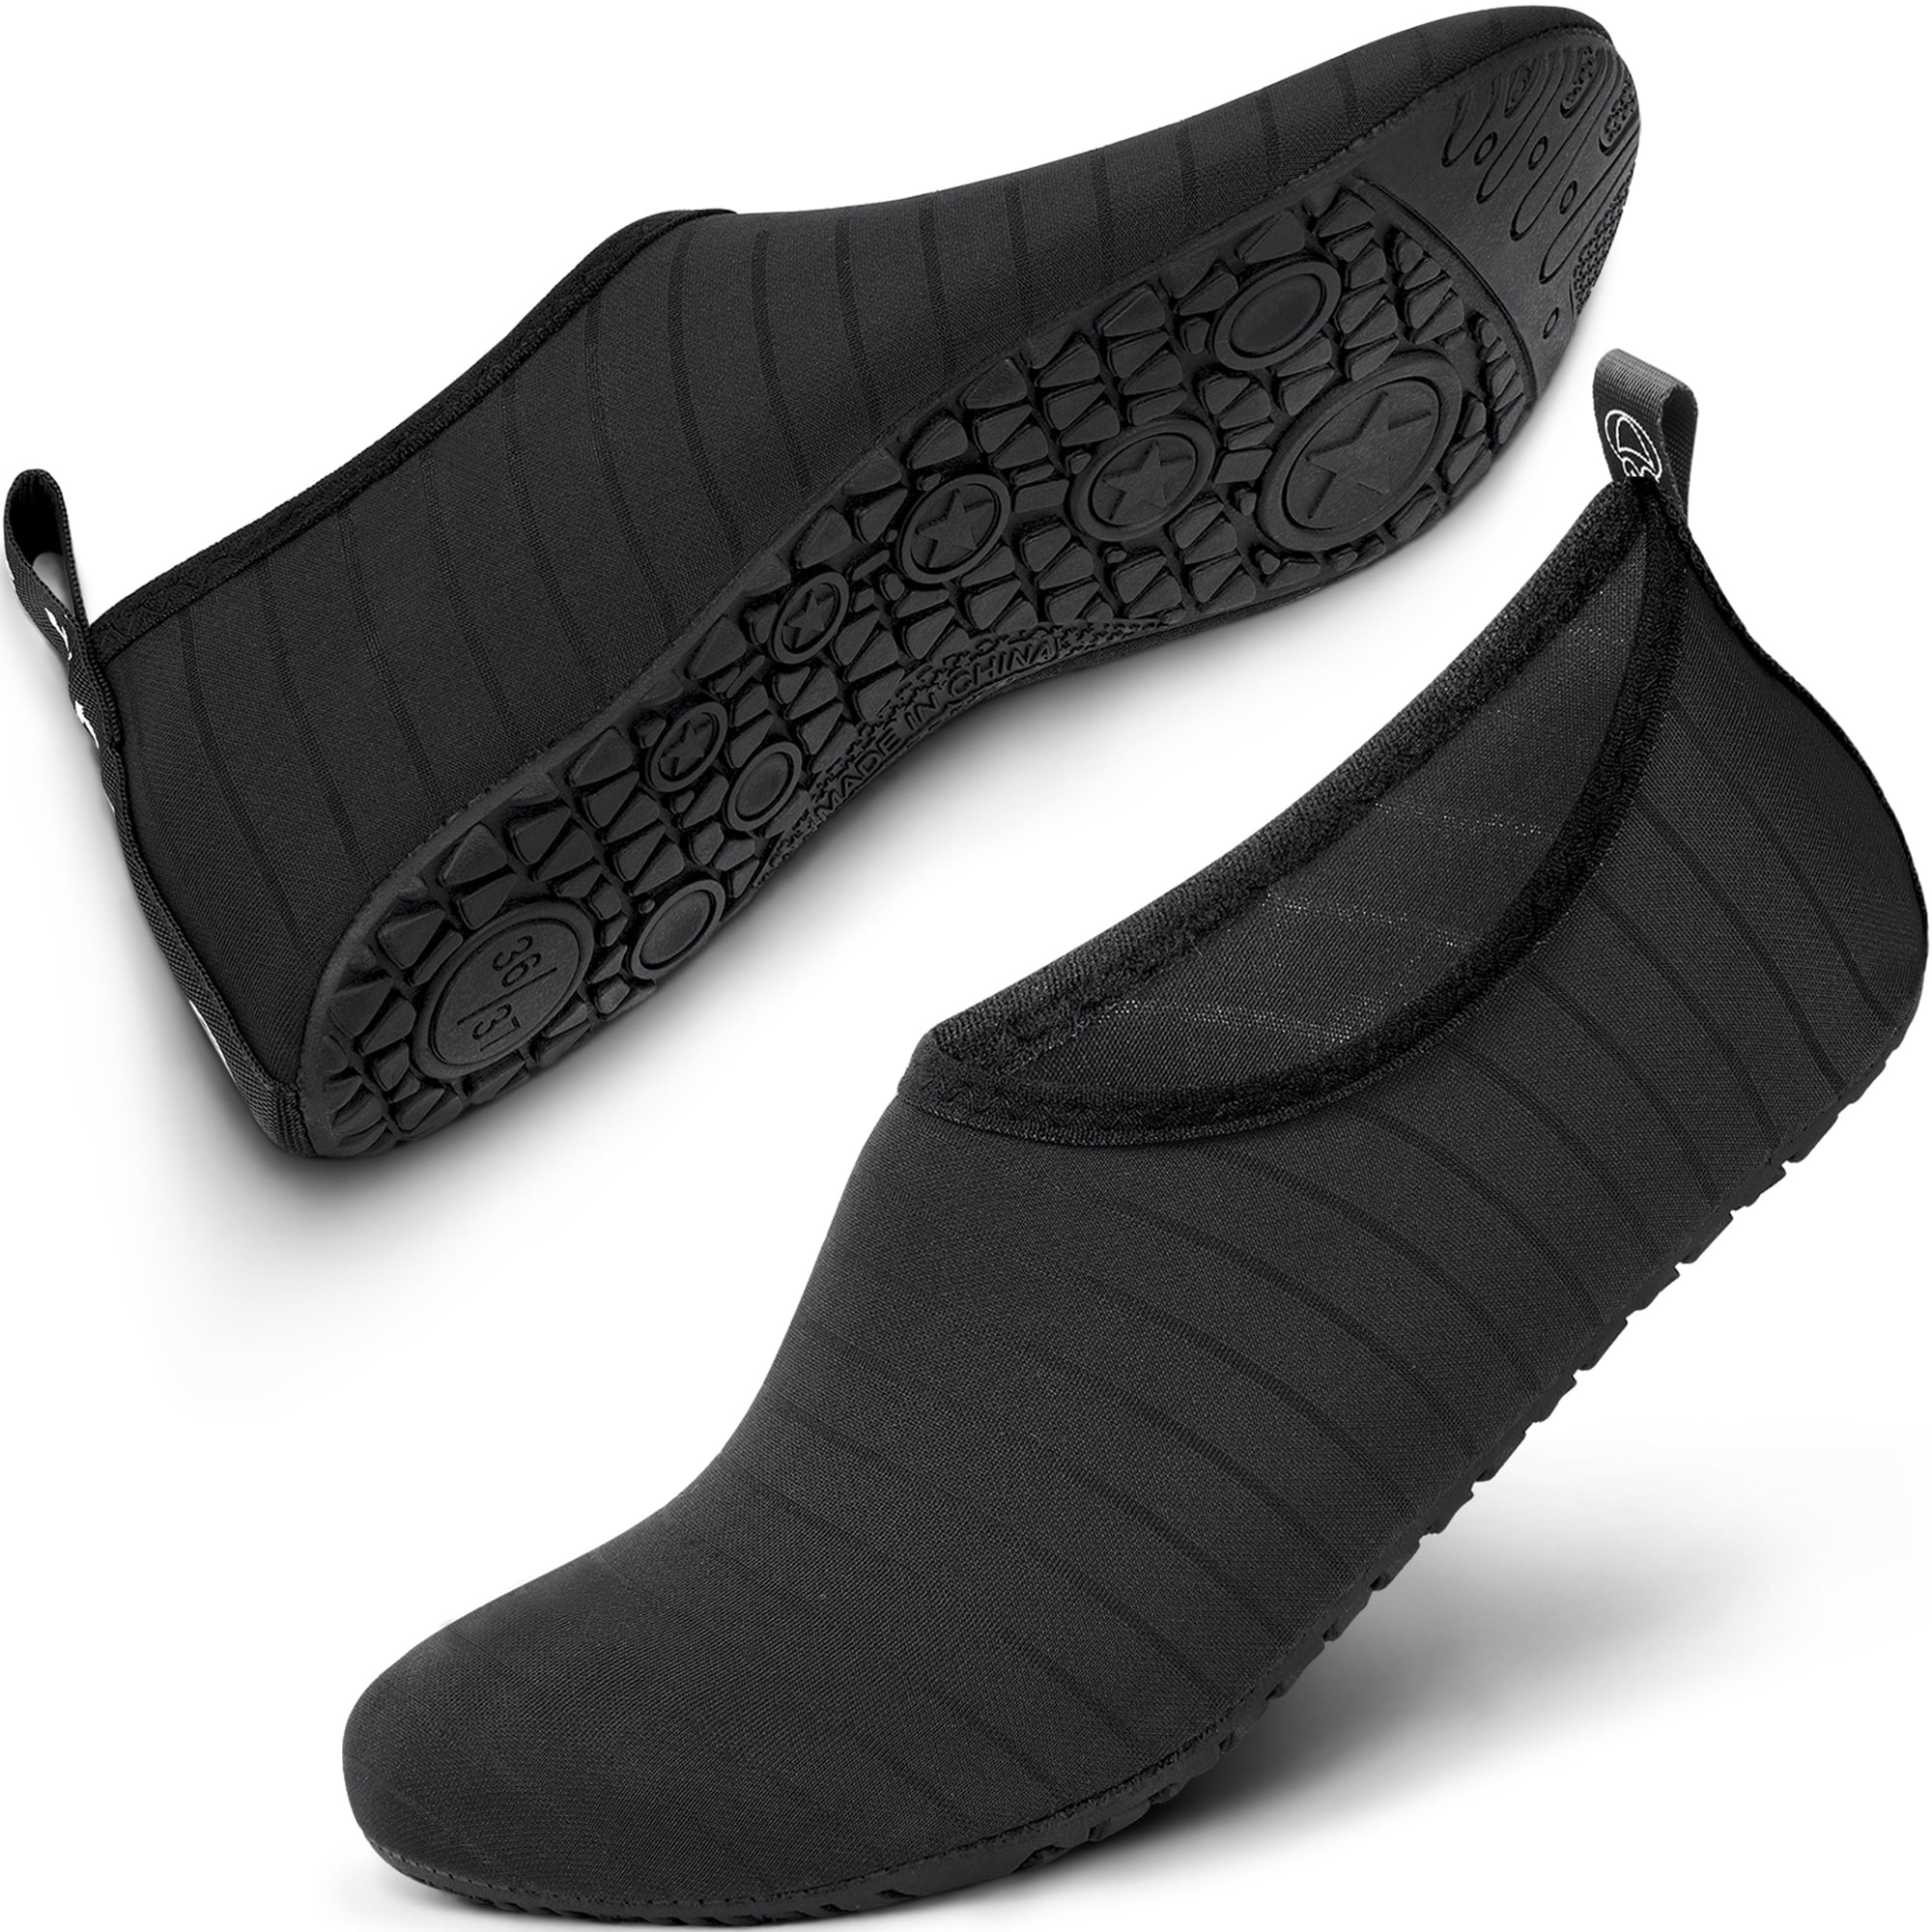 Water Shoes Skin Socks Quick-Dry Aqua Beach Swim Sports Vacation Barefoot Unisex 